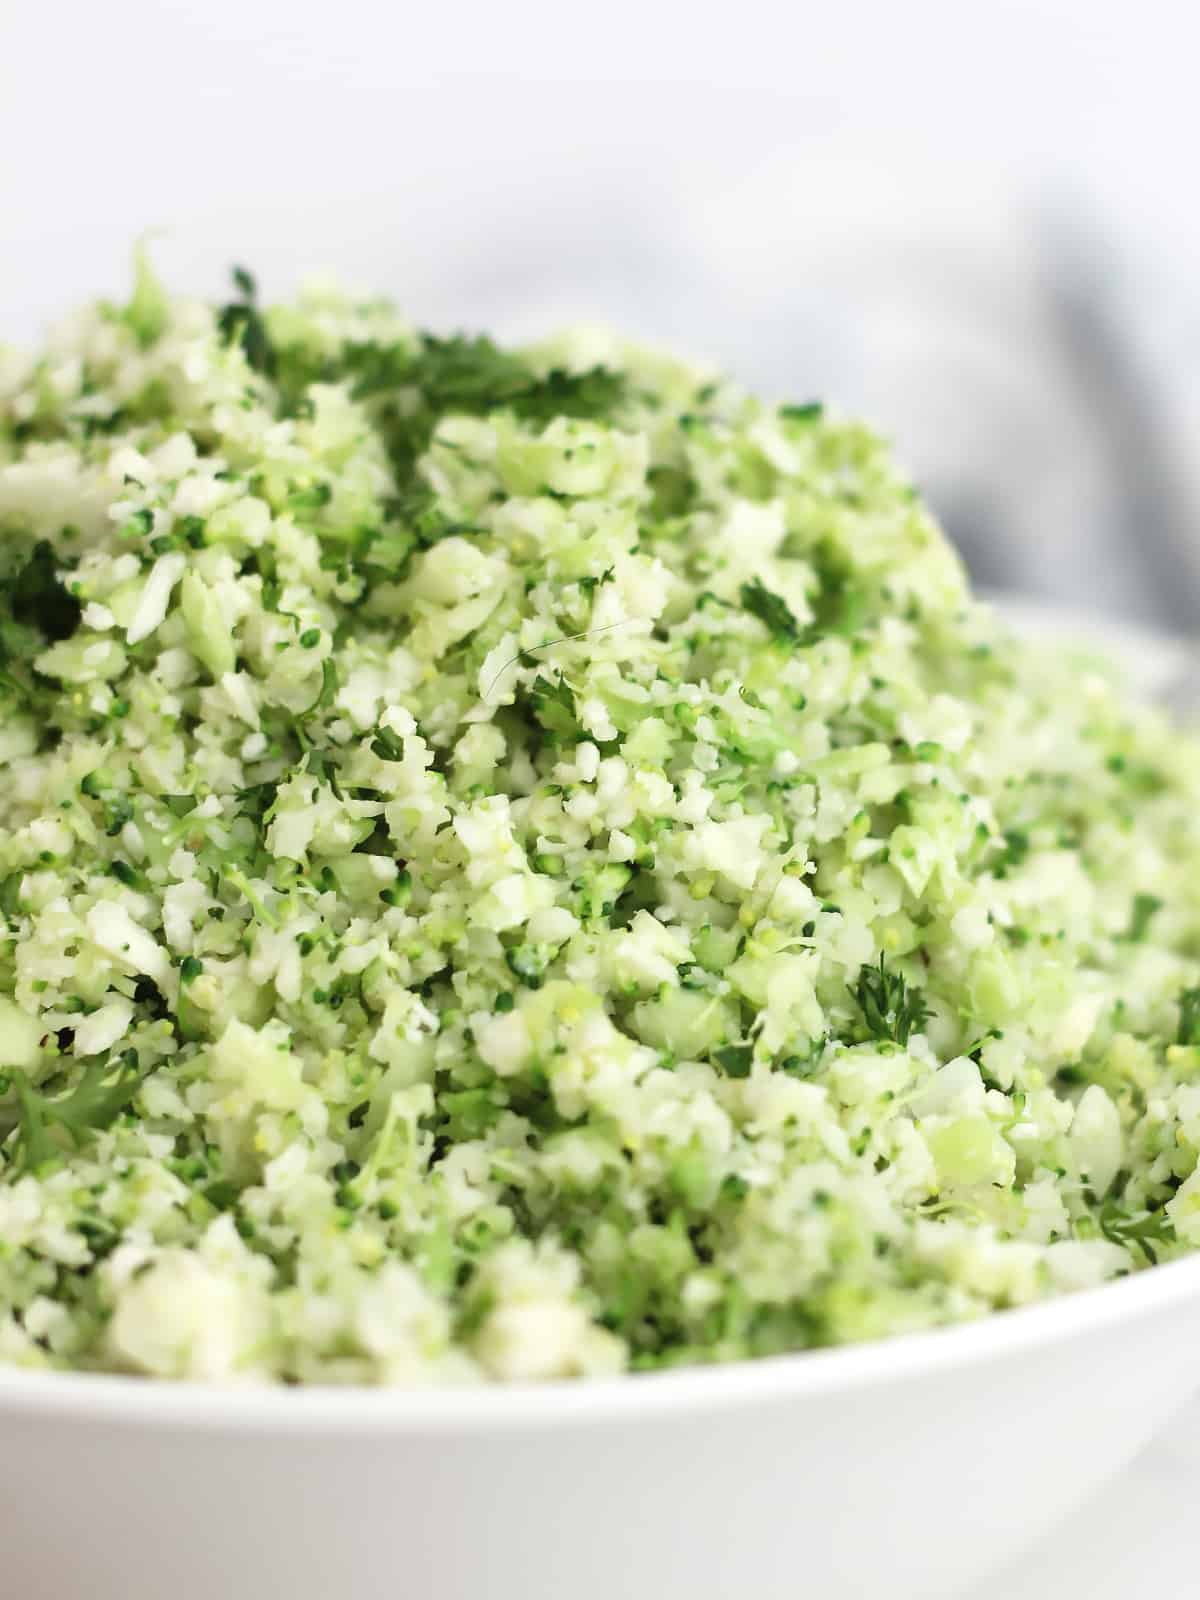 Close up of riced broccoli and cauliflower.